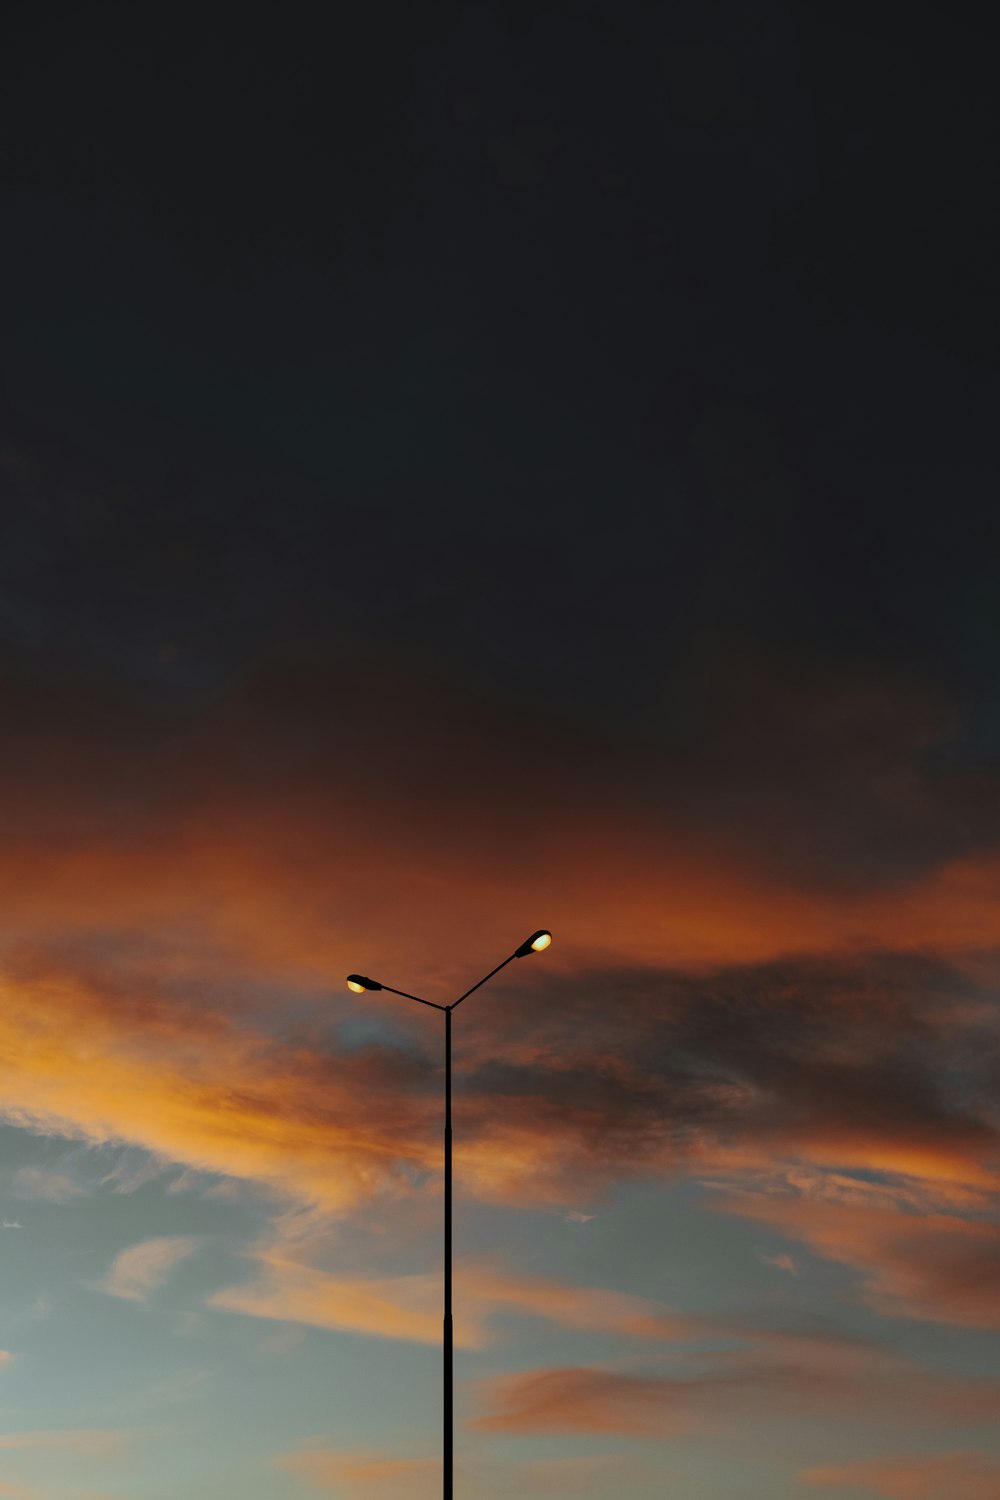 black street light under orange and blue sky